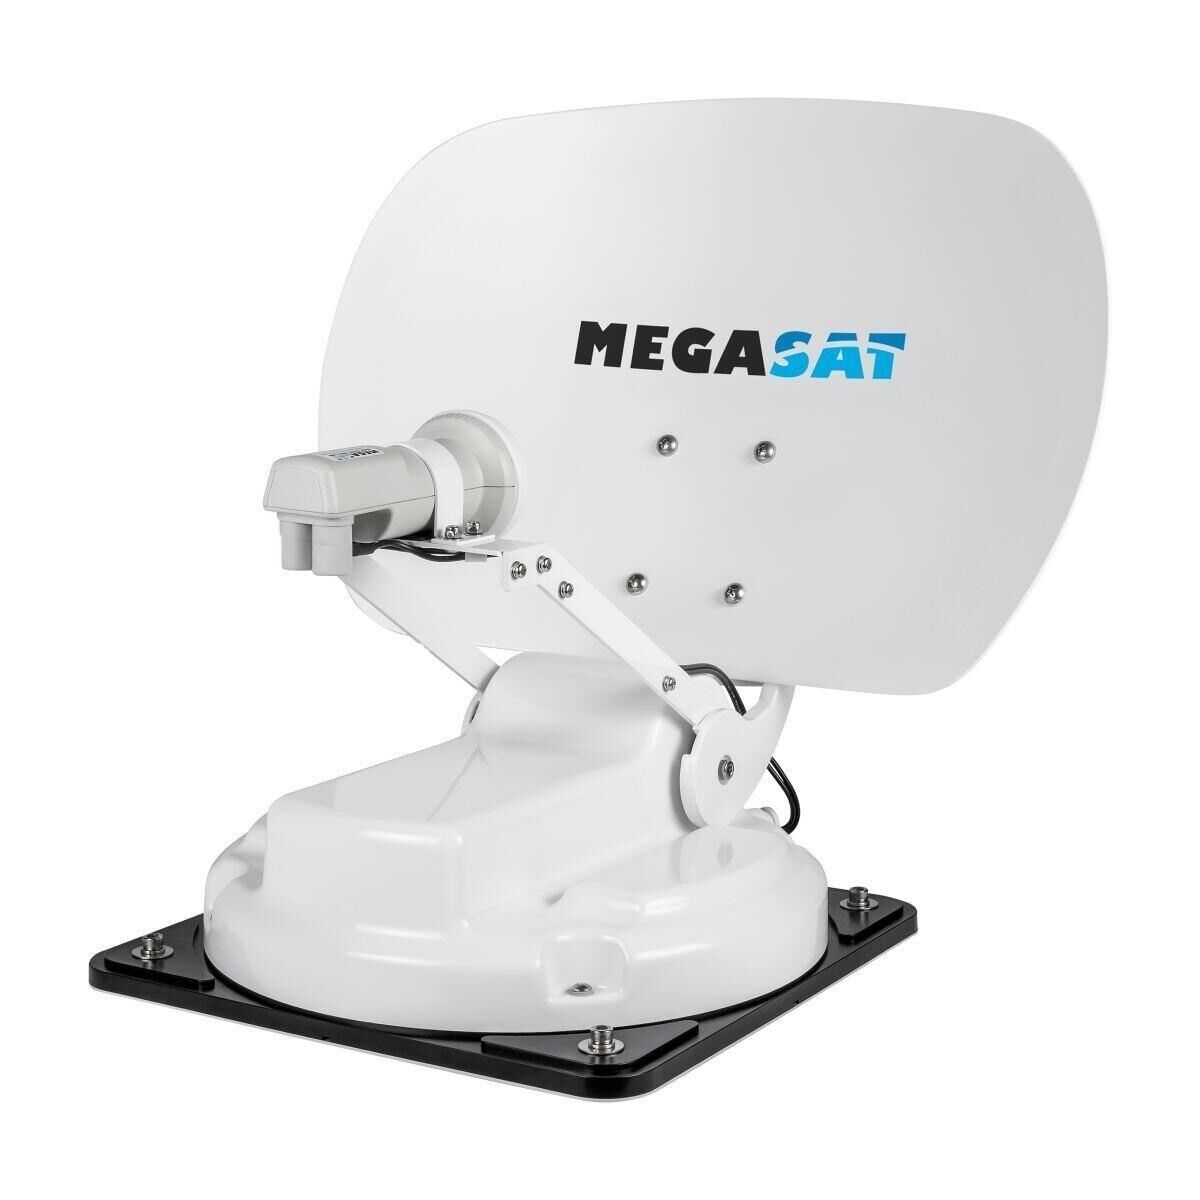 Megasat Satanlage Automatisch Caravanman Kompakt 3 Single Version